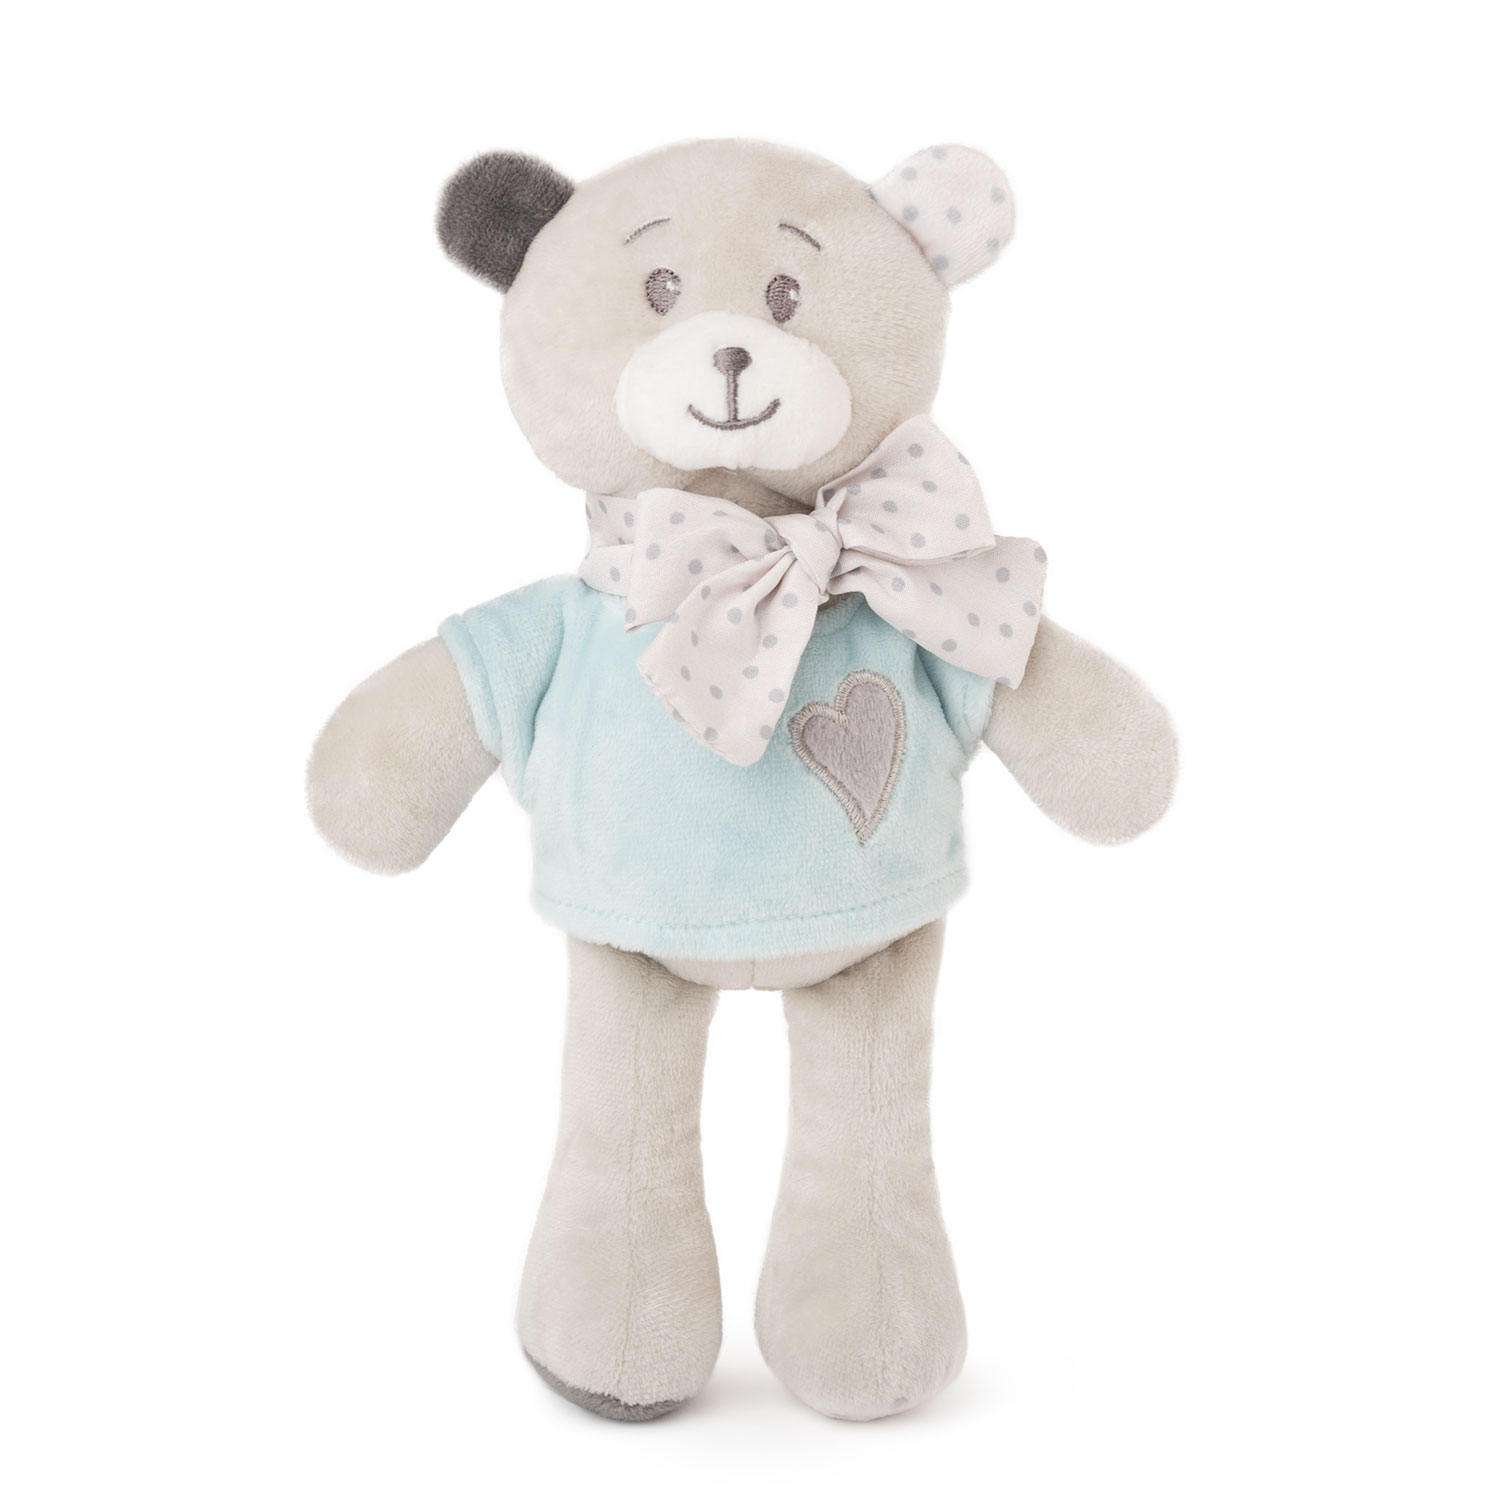 Baby toy bear - Blue